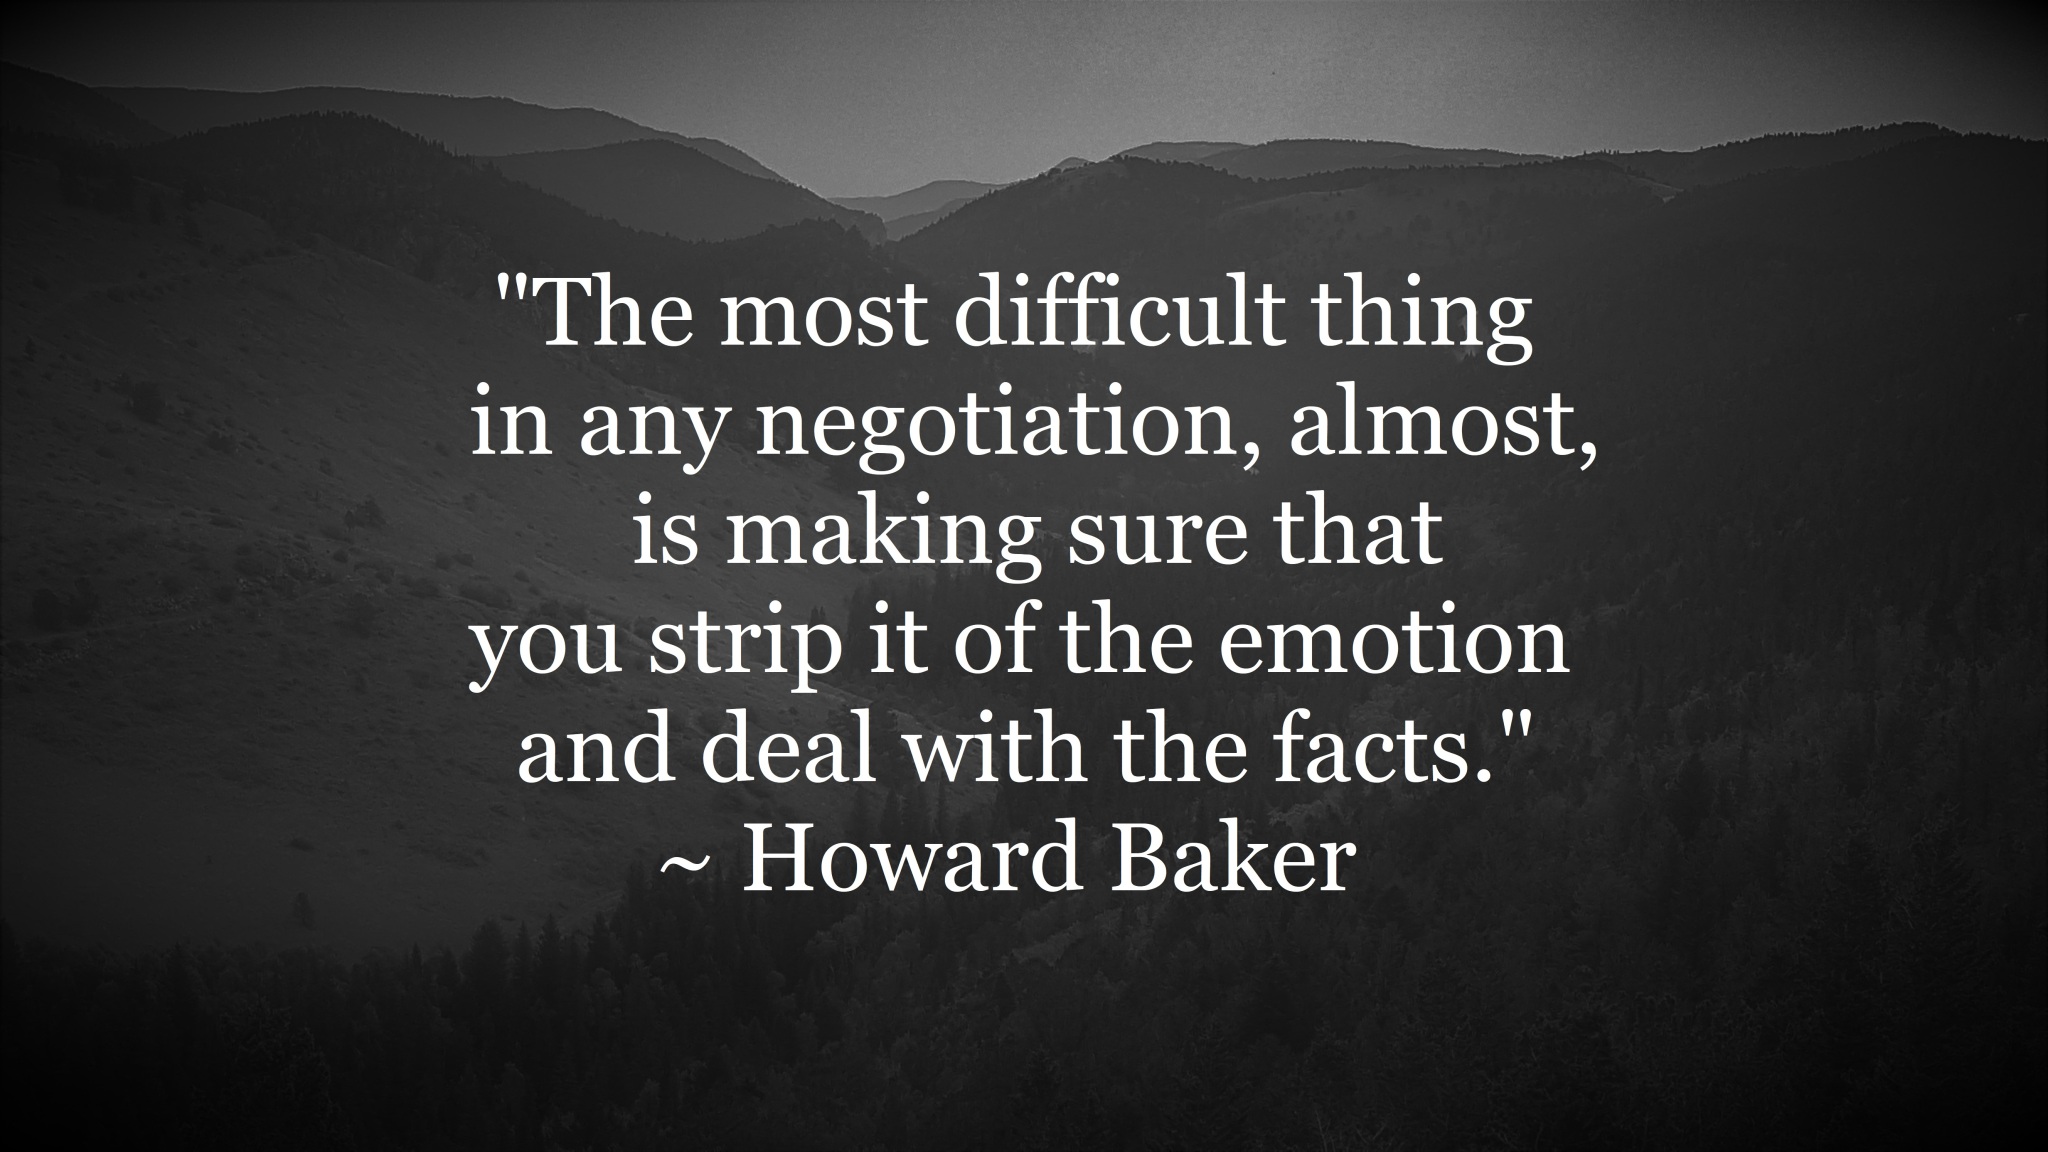 Howard Baker - take emotion out of conflict